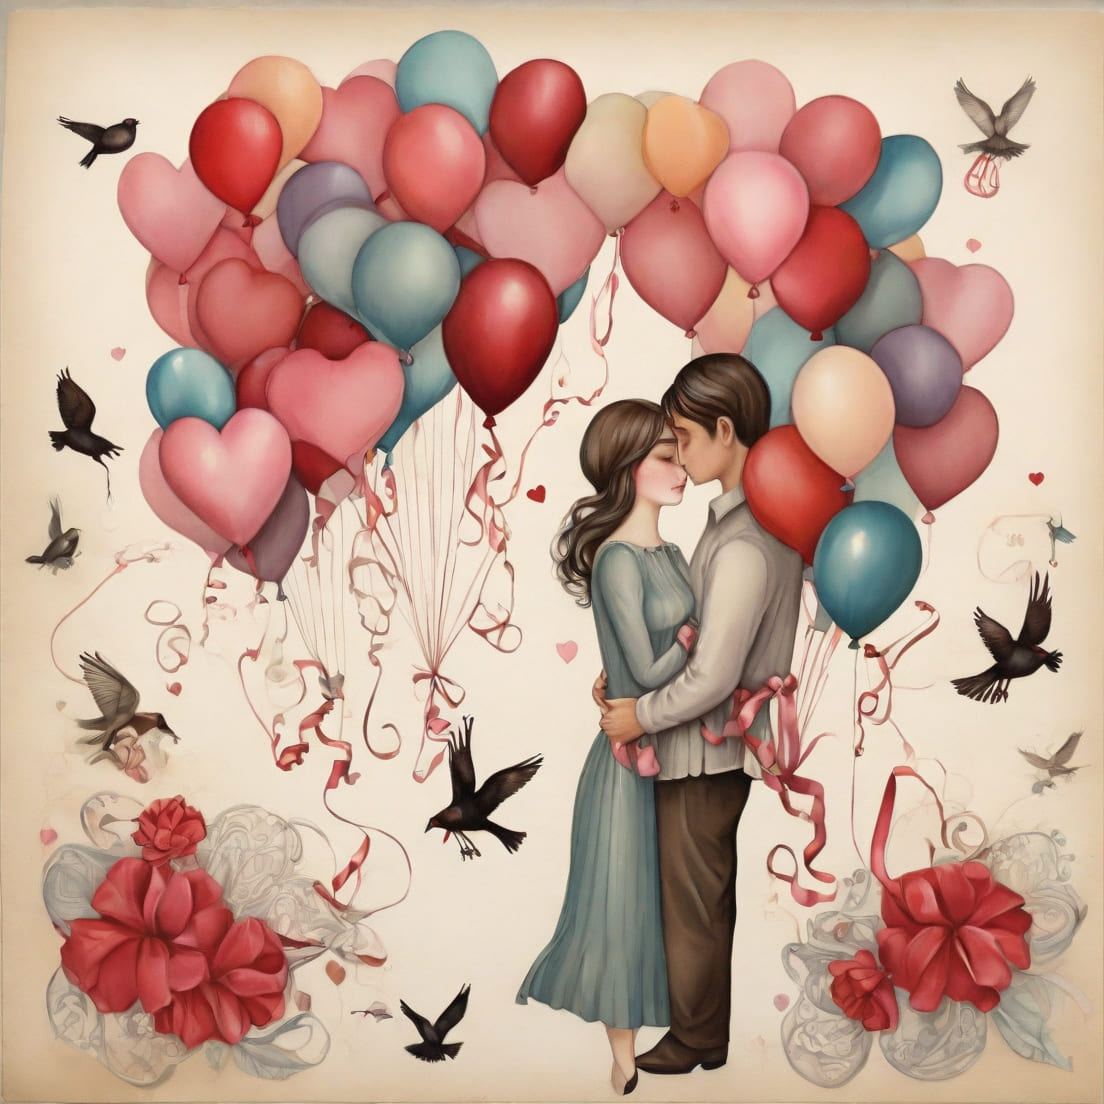 postcard balloons ribbons birds hearts w 1 1